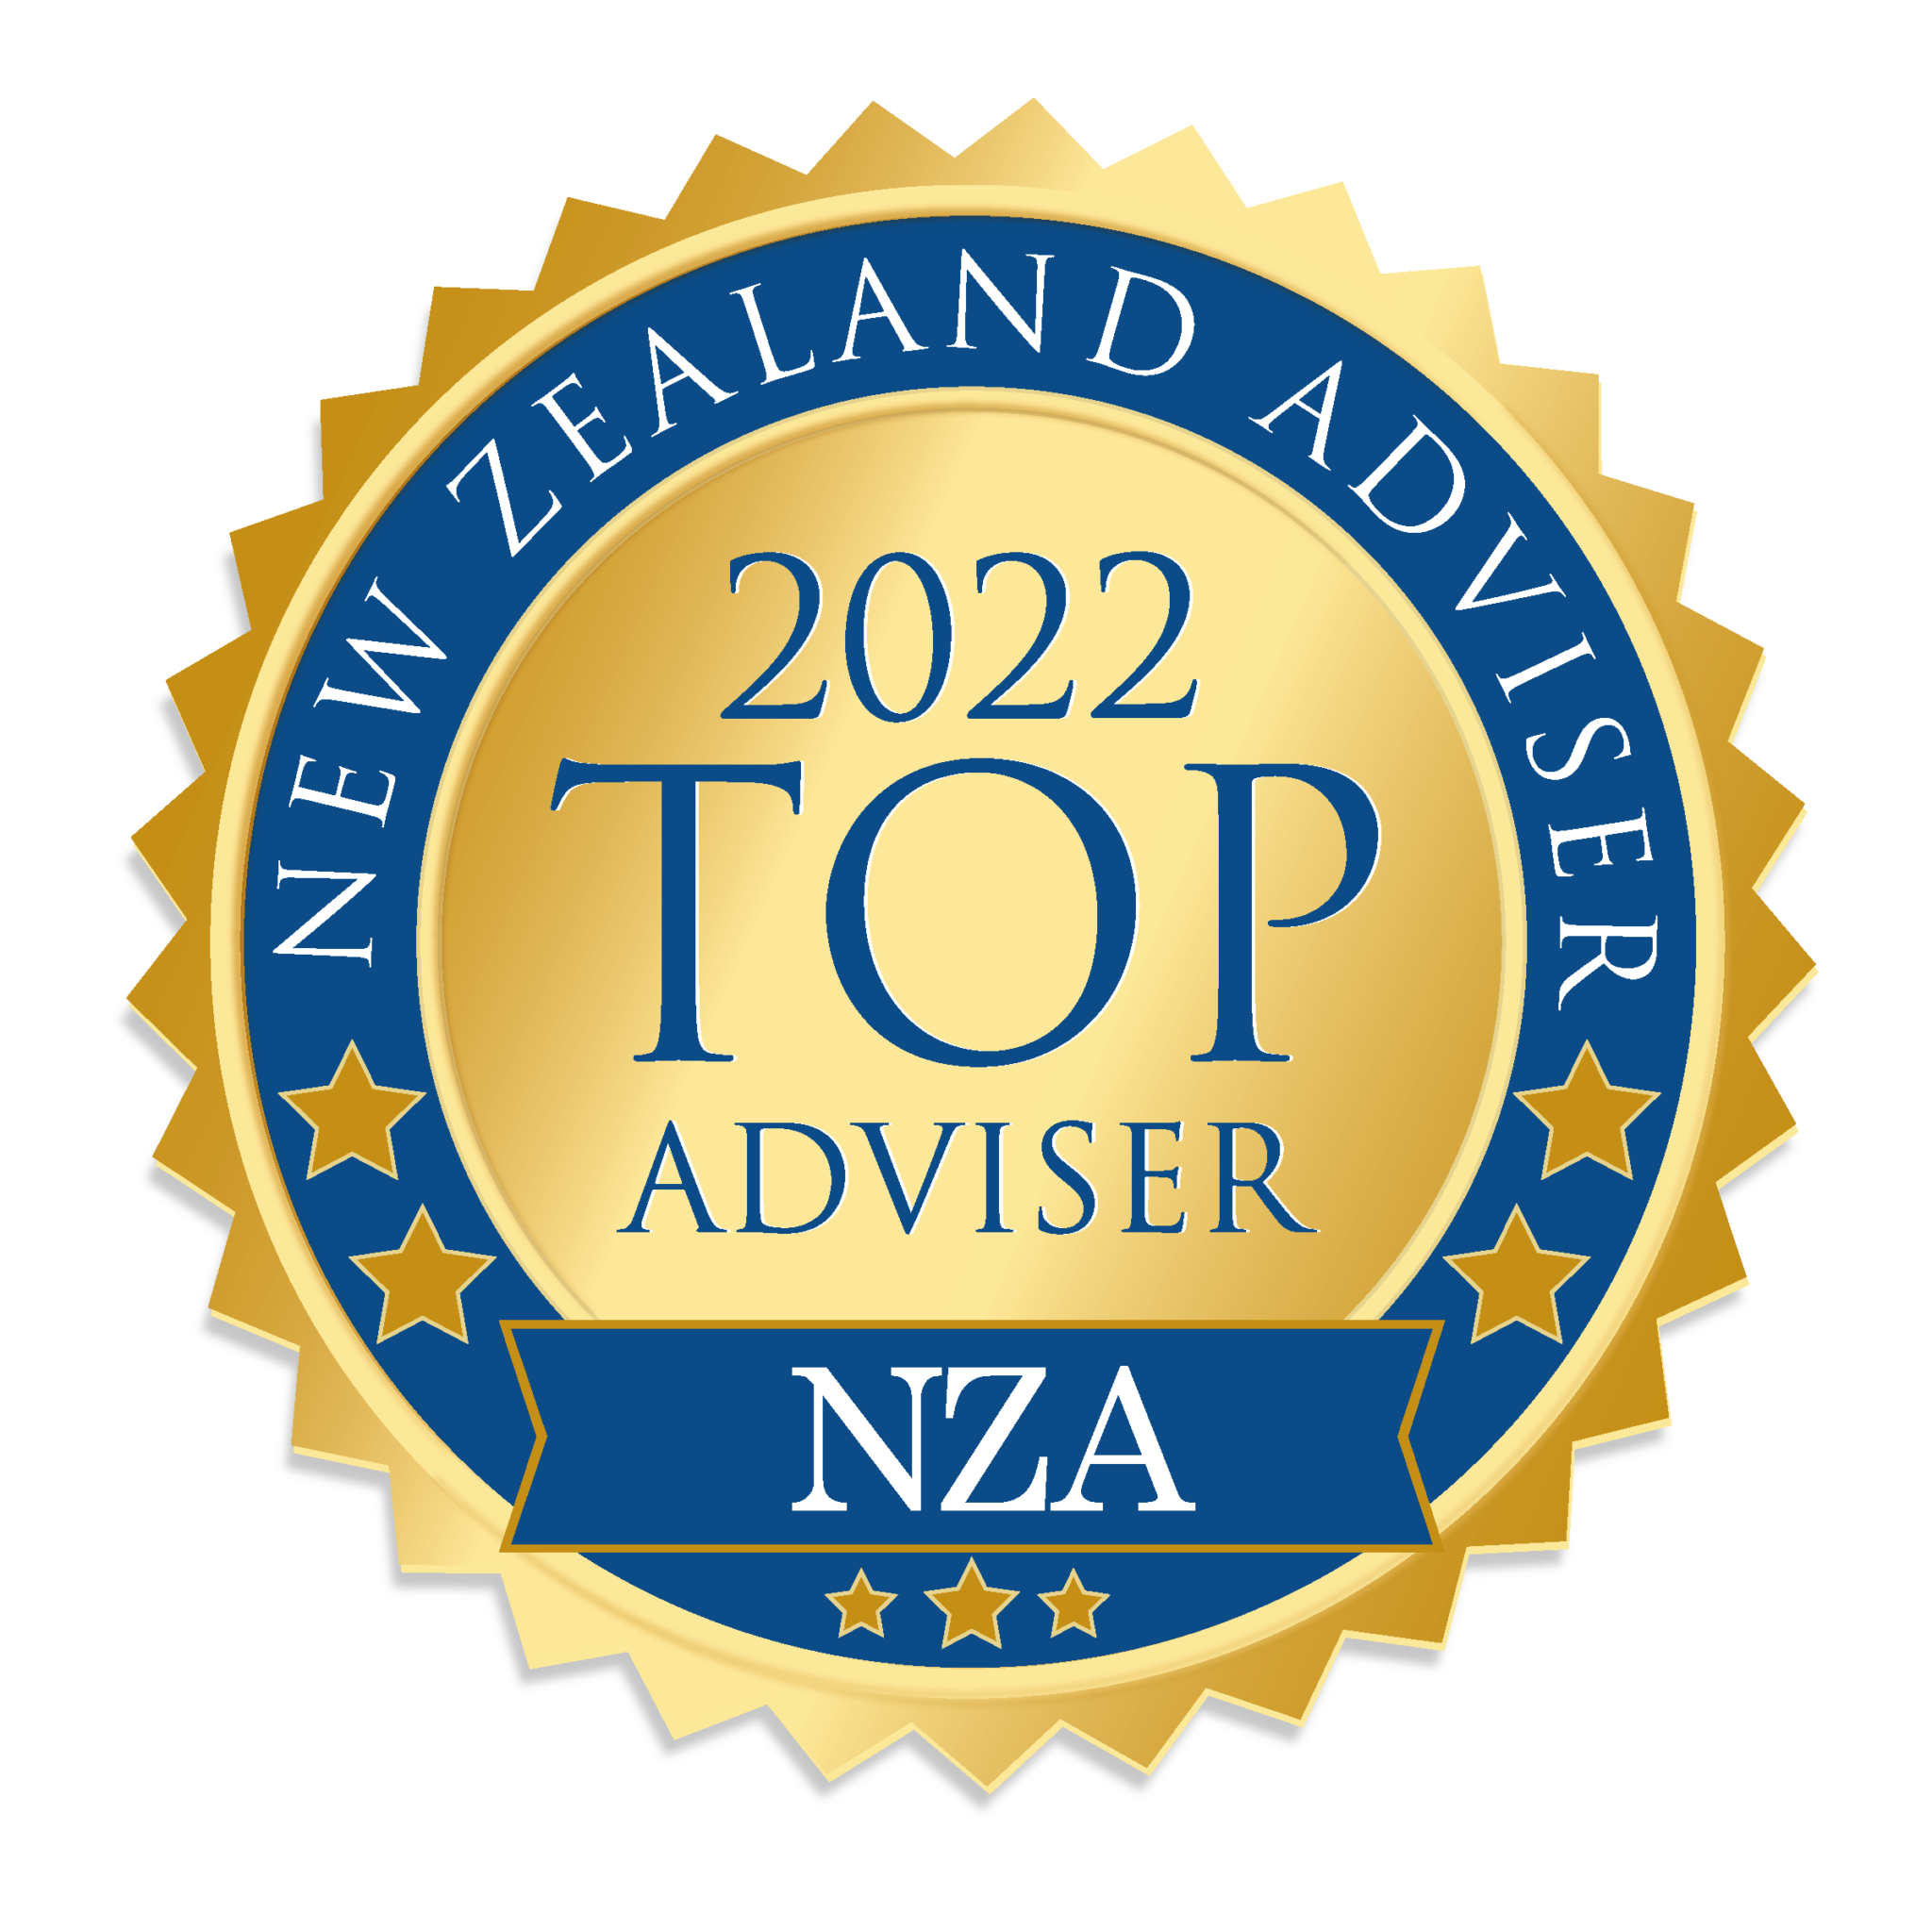 NZ Adviser Top Adviser 2022 Medal 2048x2046 1